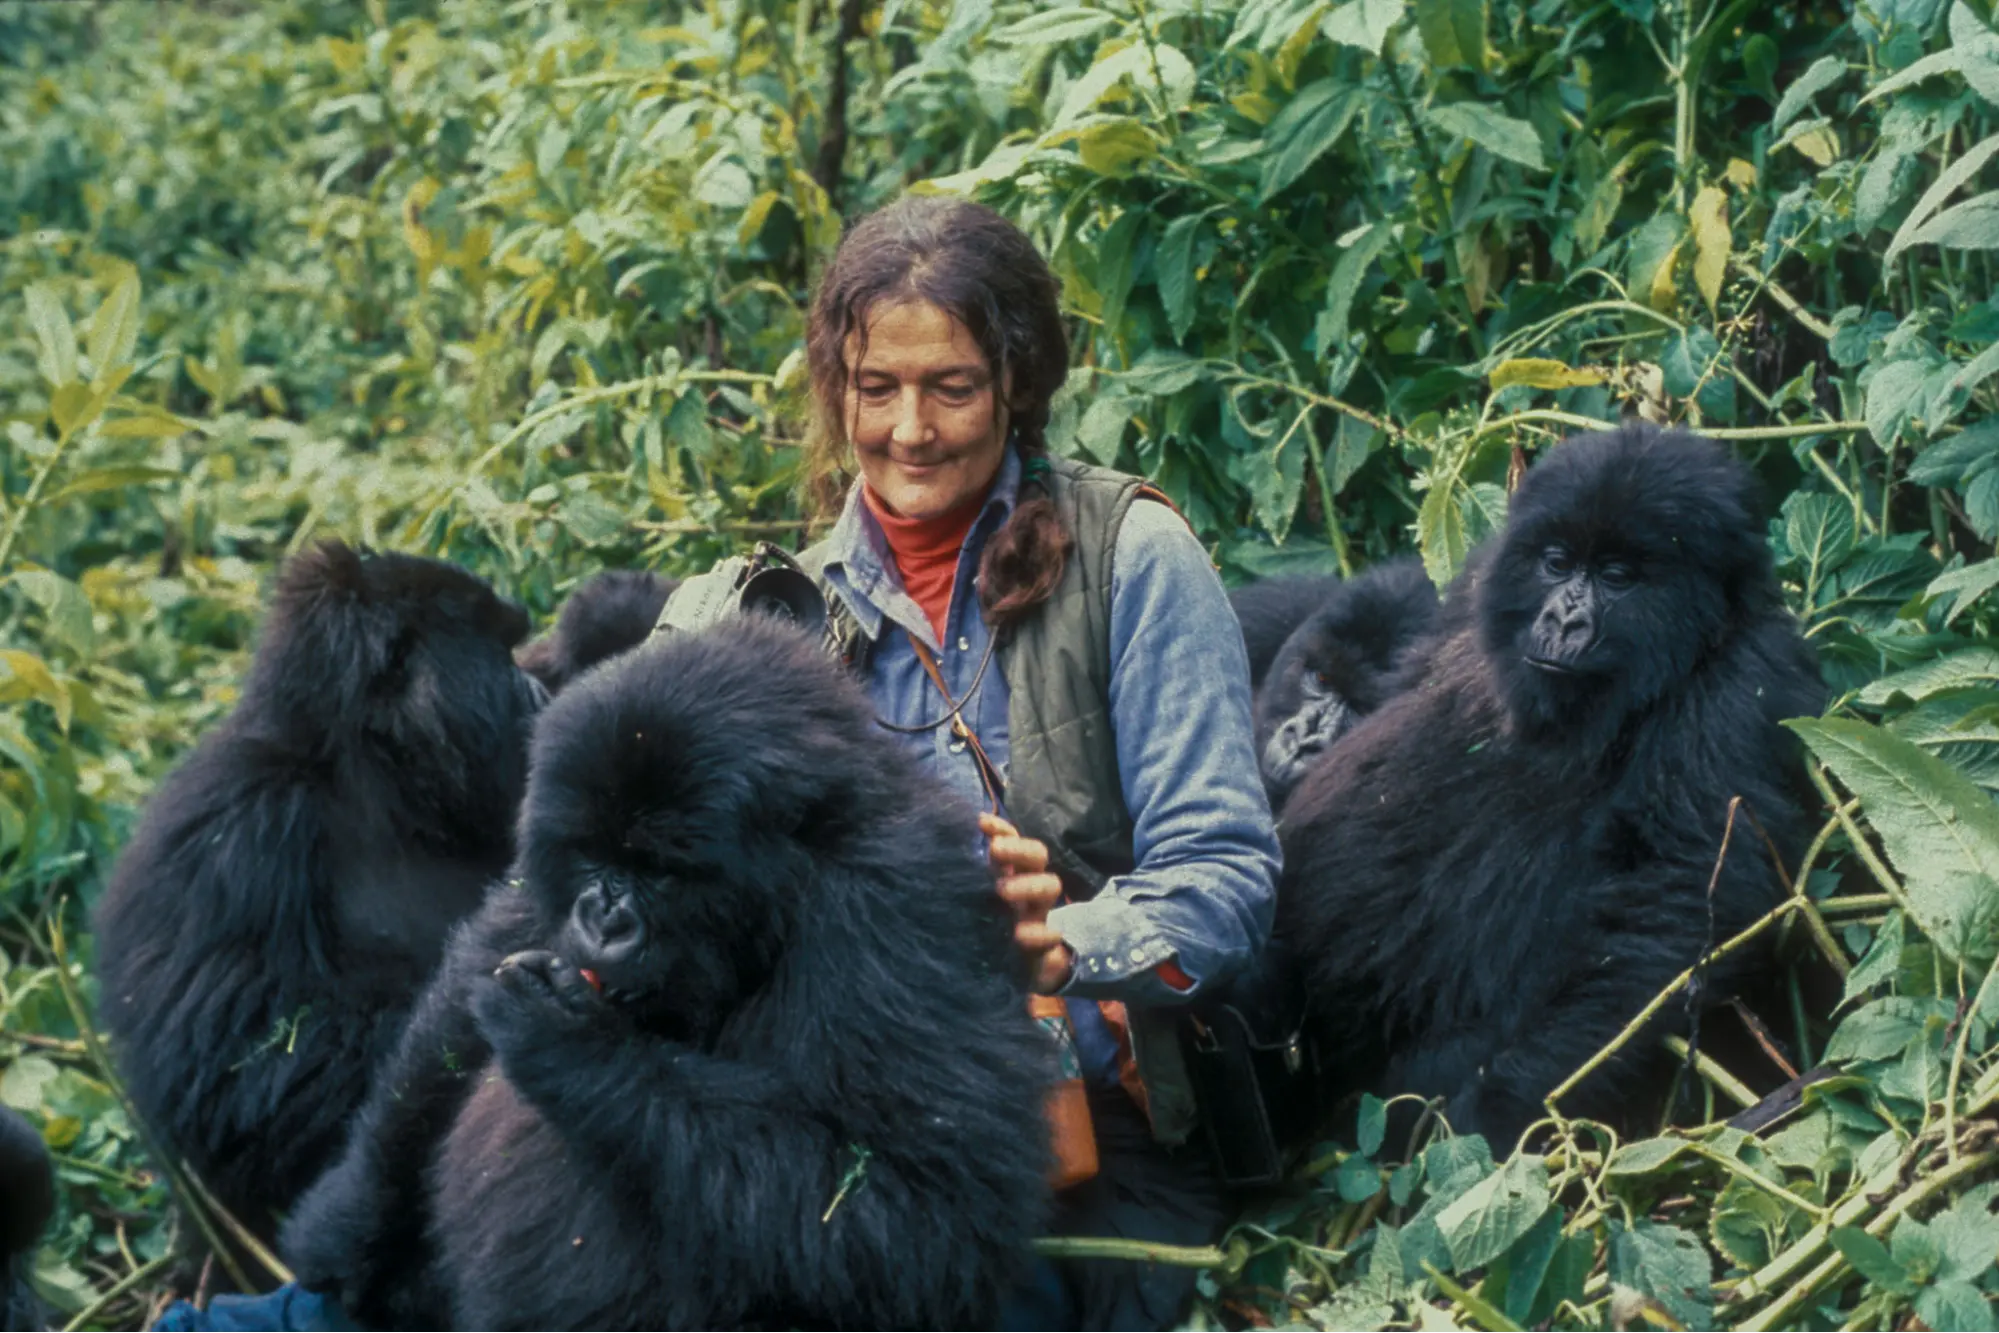 Learning about gorilla conservation on Gorilla tours Rwanda - Dian Fossey with Mountain Gorillas